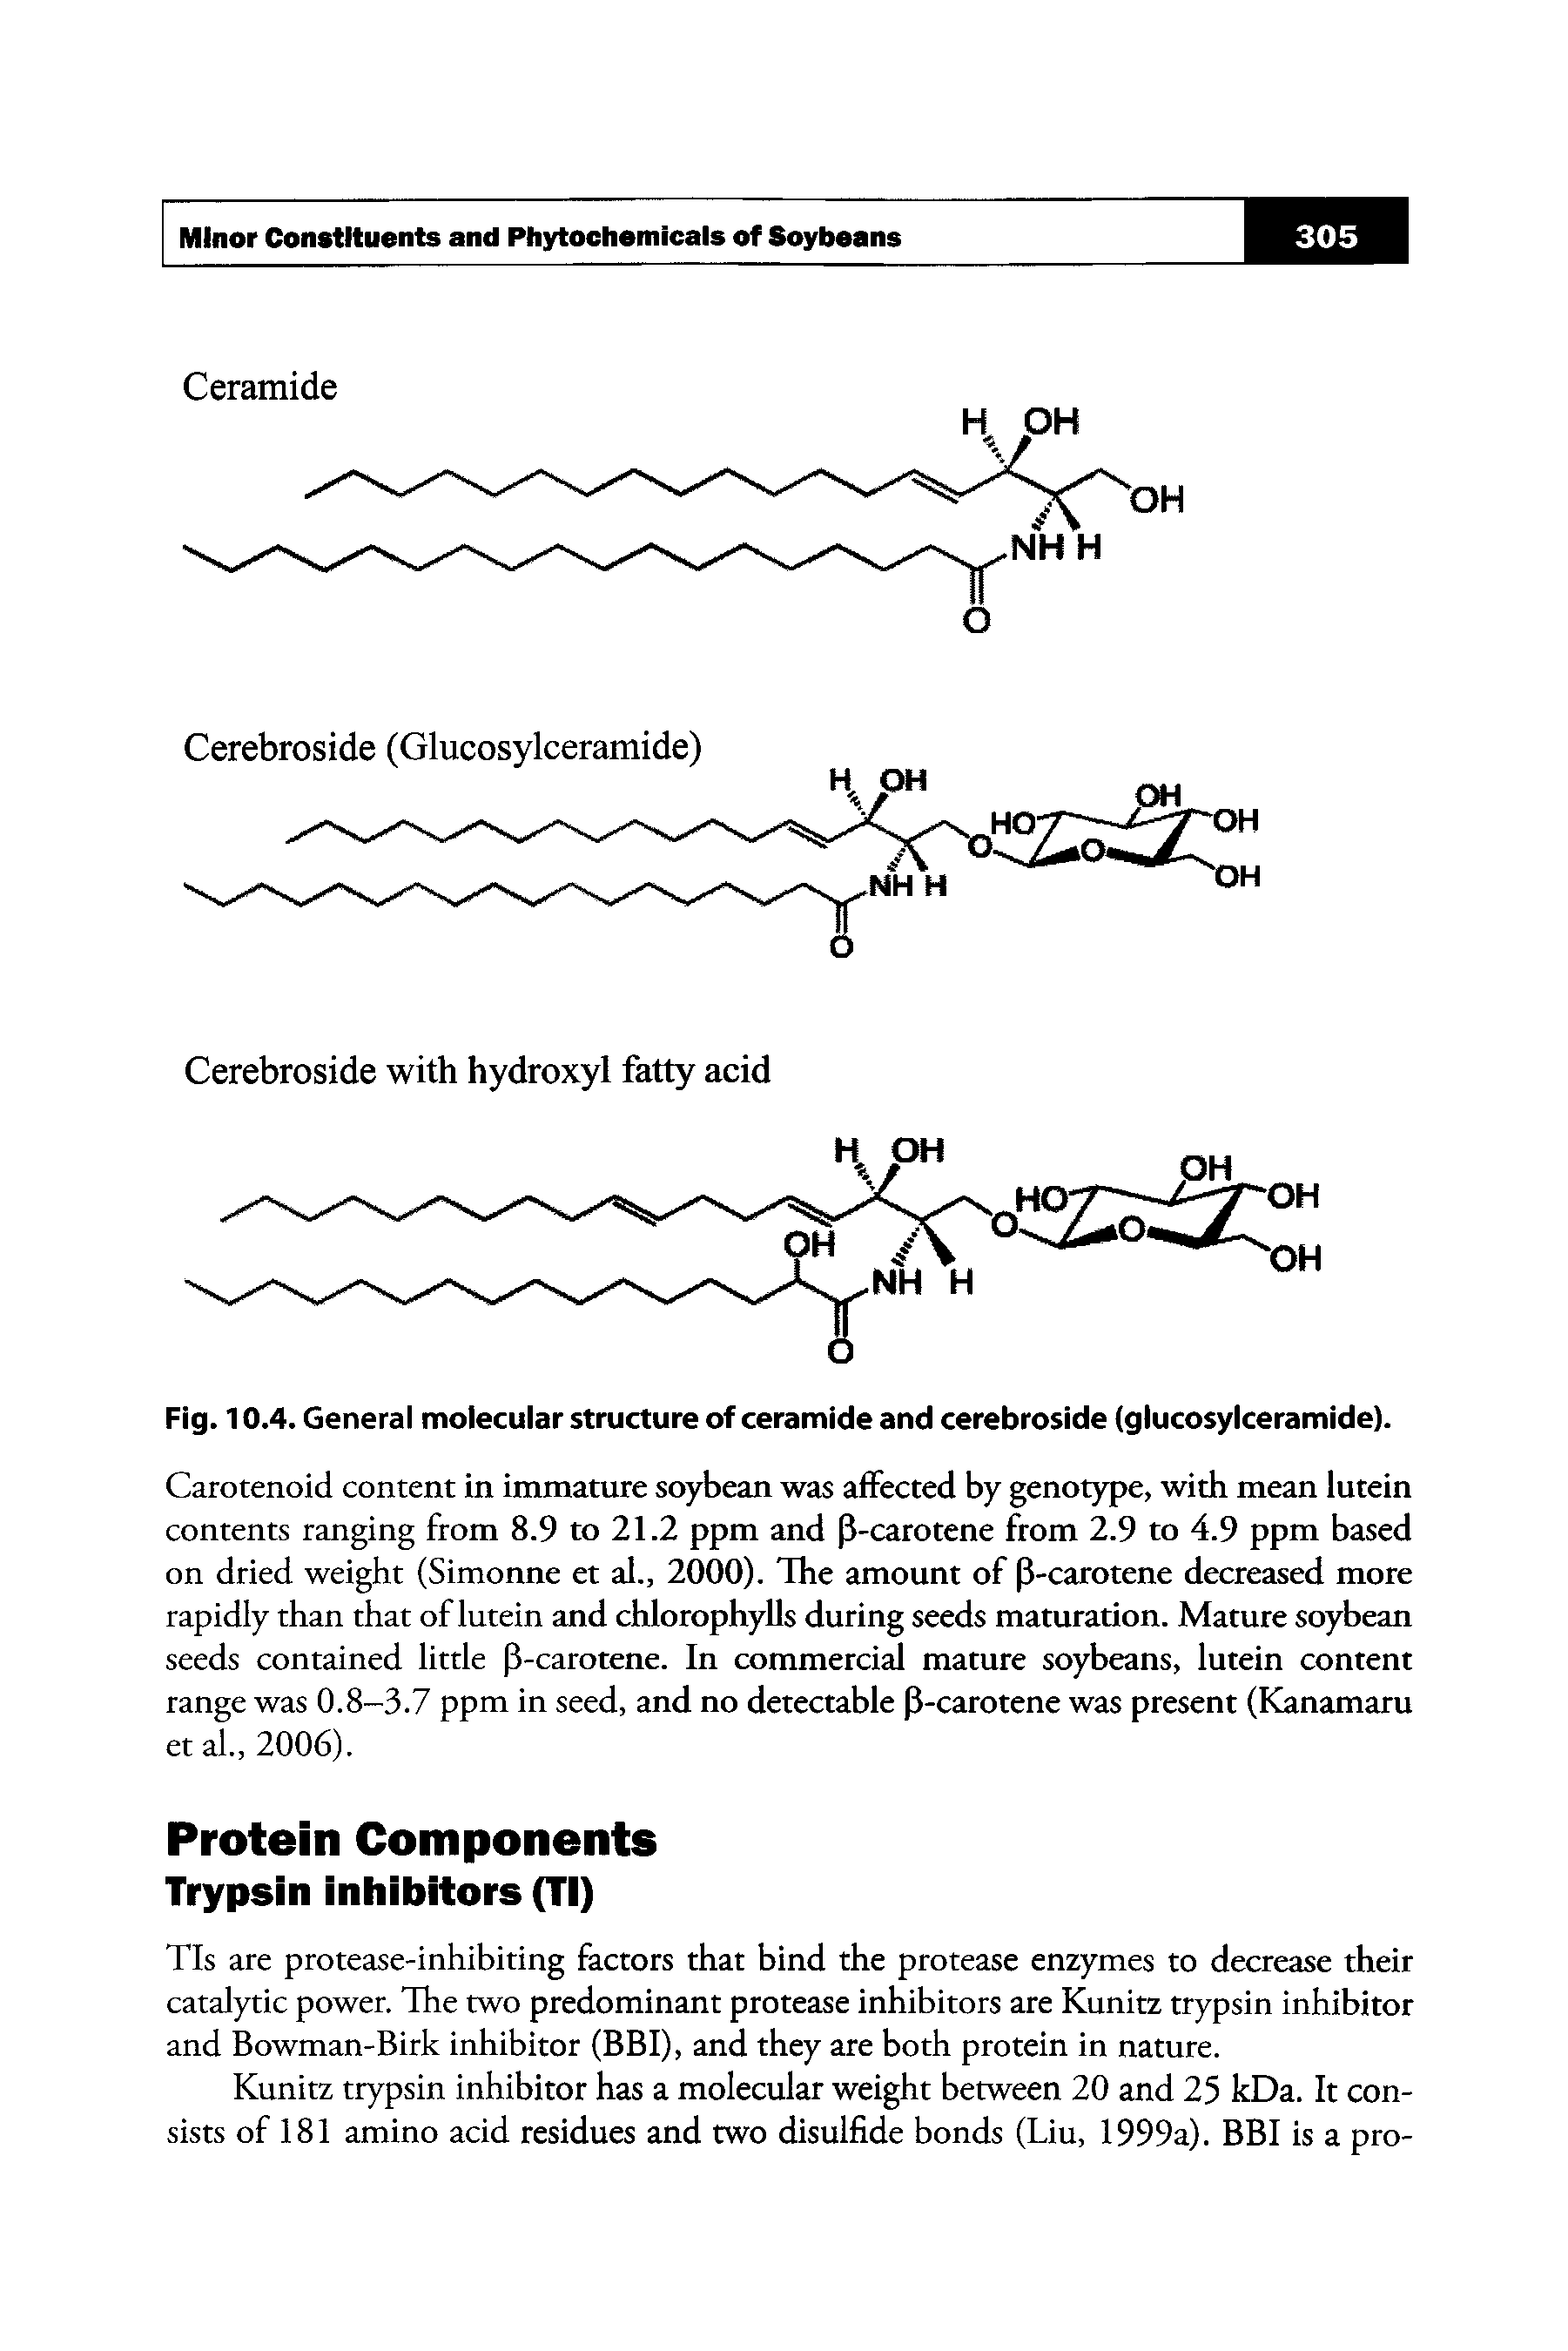 Fig. 10.4. General molecular structure of ceramide and cerebroside (glucosylceramide).